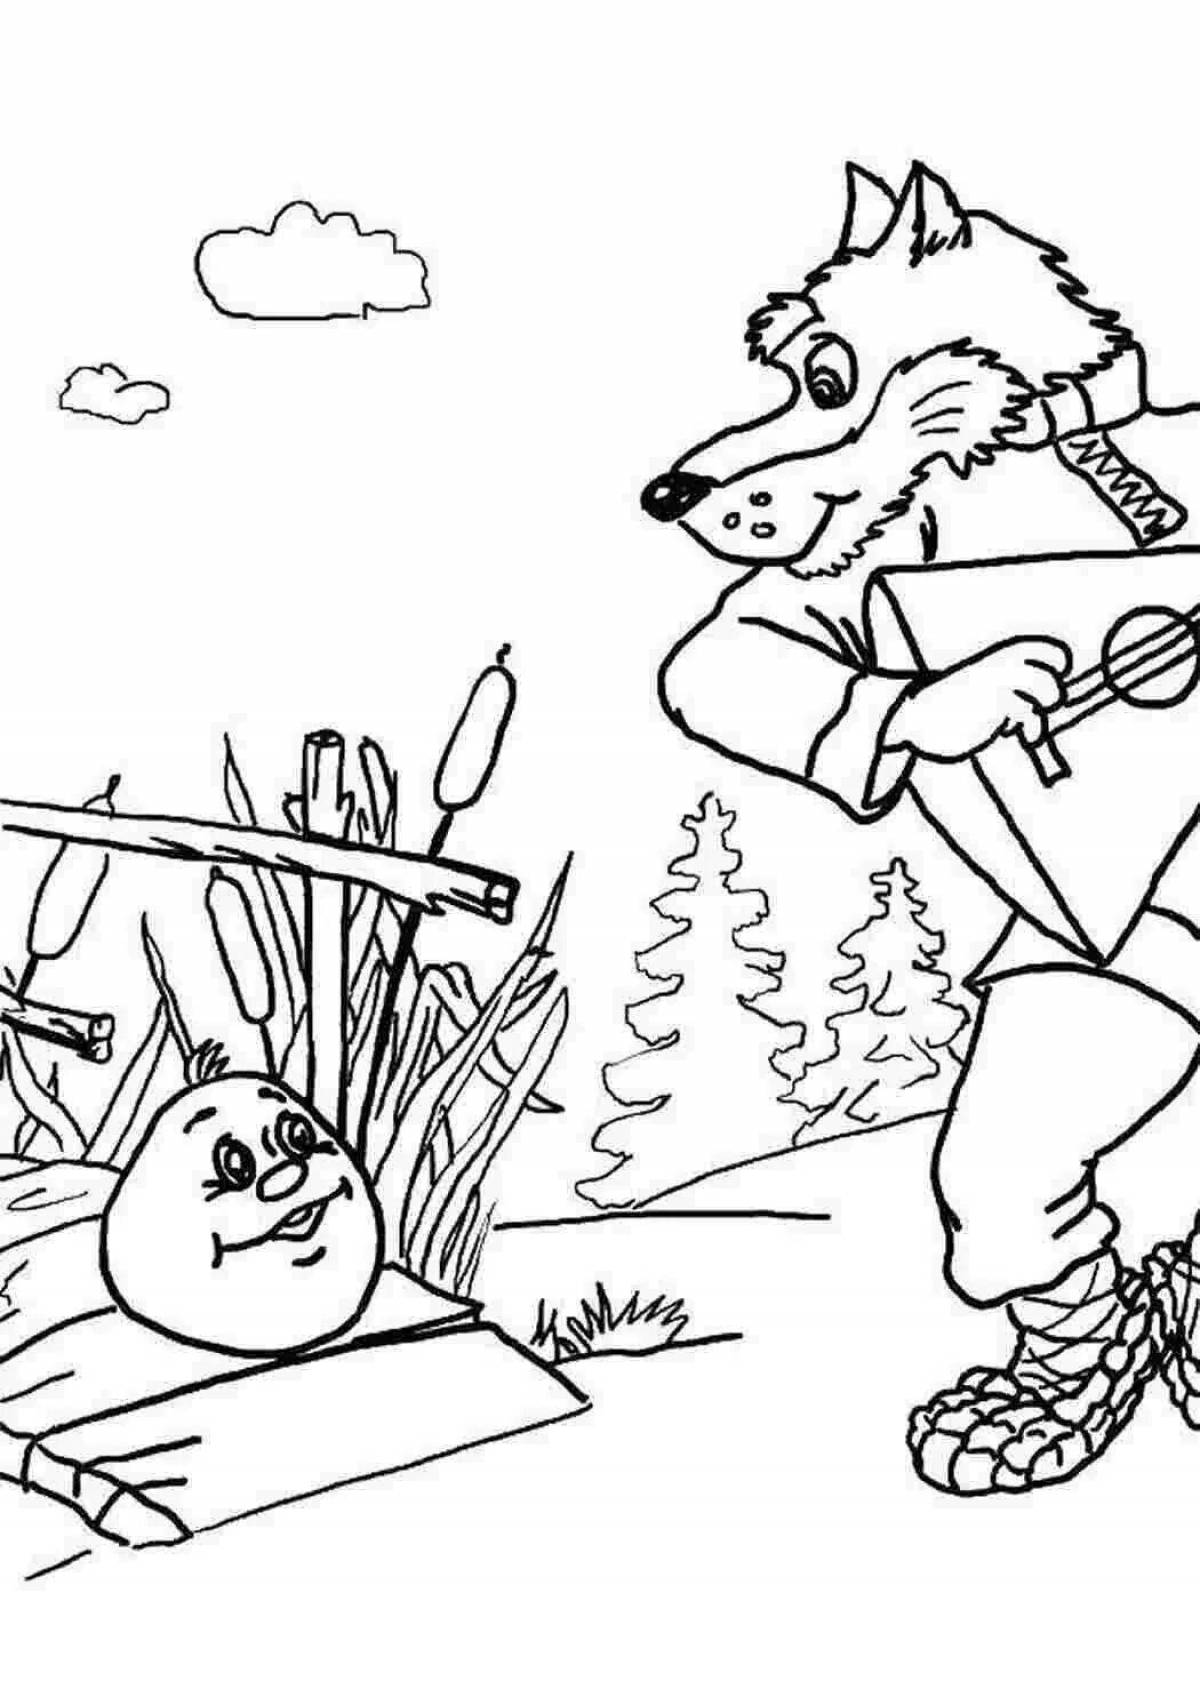 Coloring page playful bun and bear